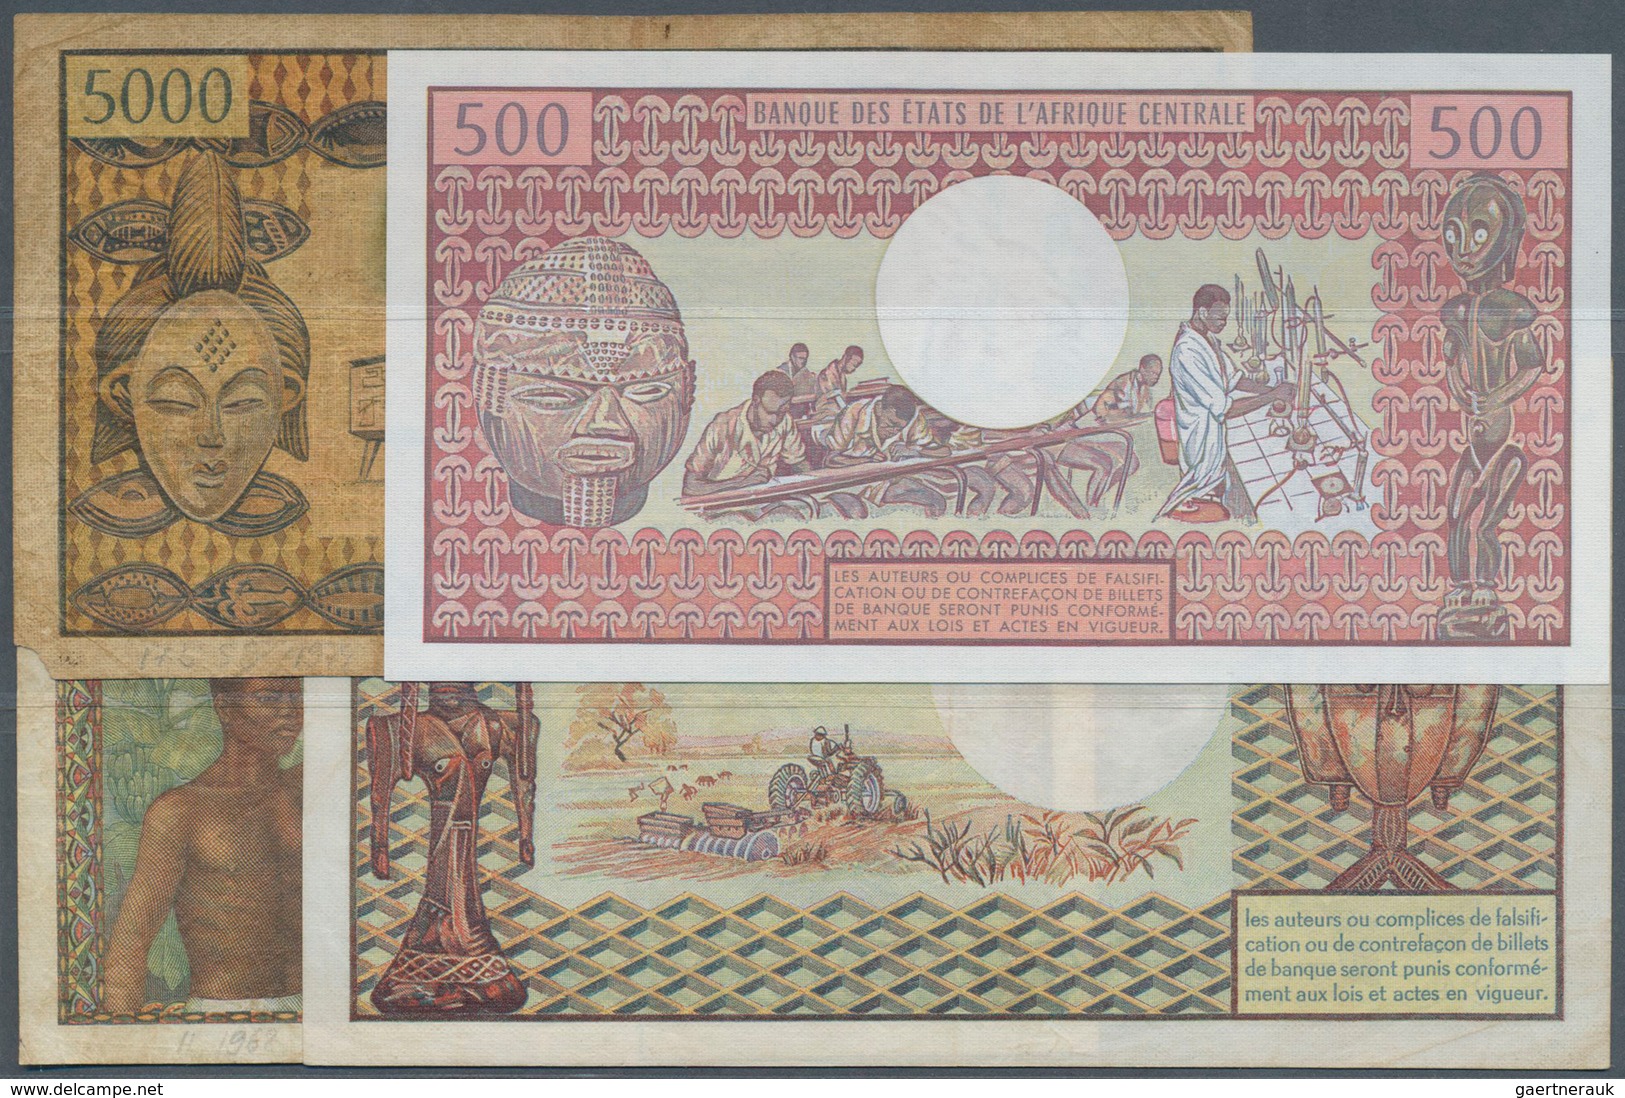 01245 Cameroon / Kamerun: Republique Federale Du Cameroun 500 Francs ND(1962) P.11 In F- And Republique Un - Cameroun